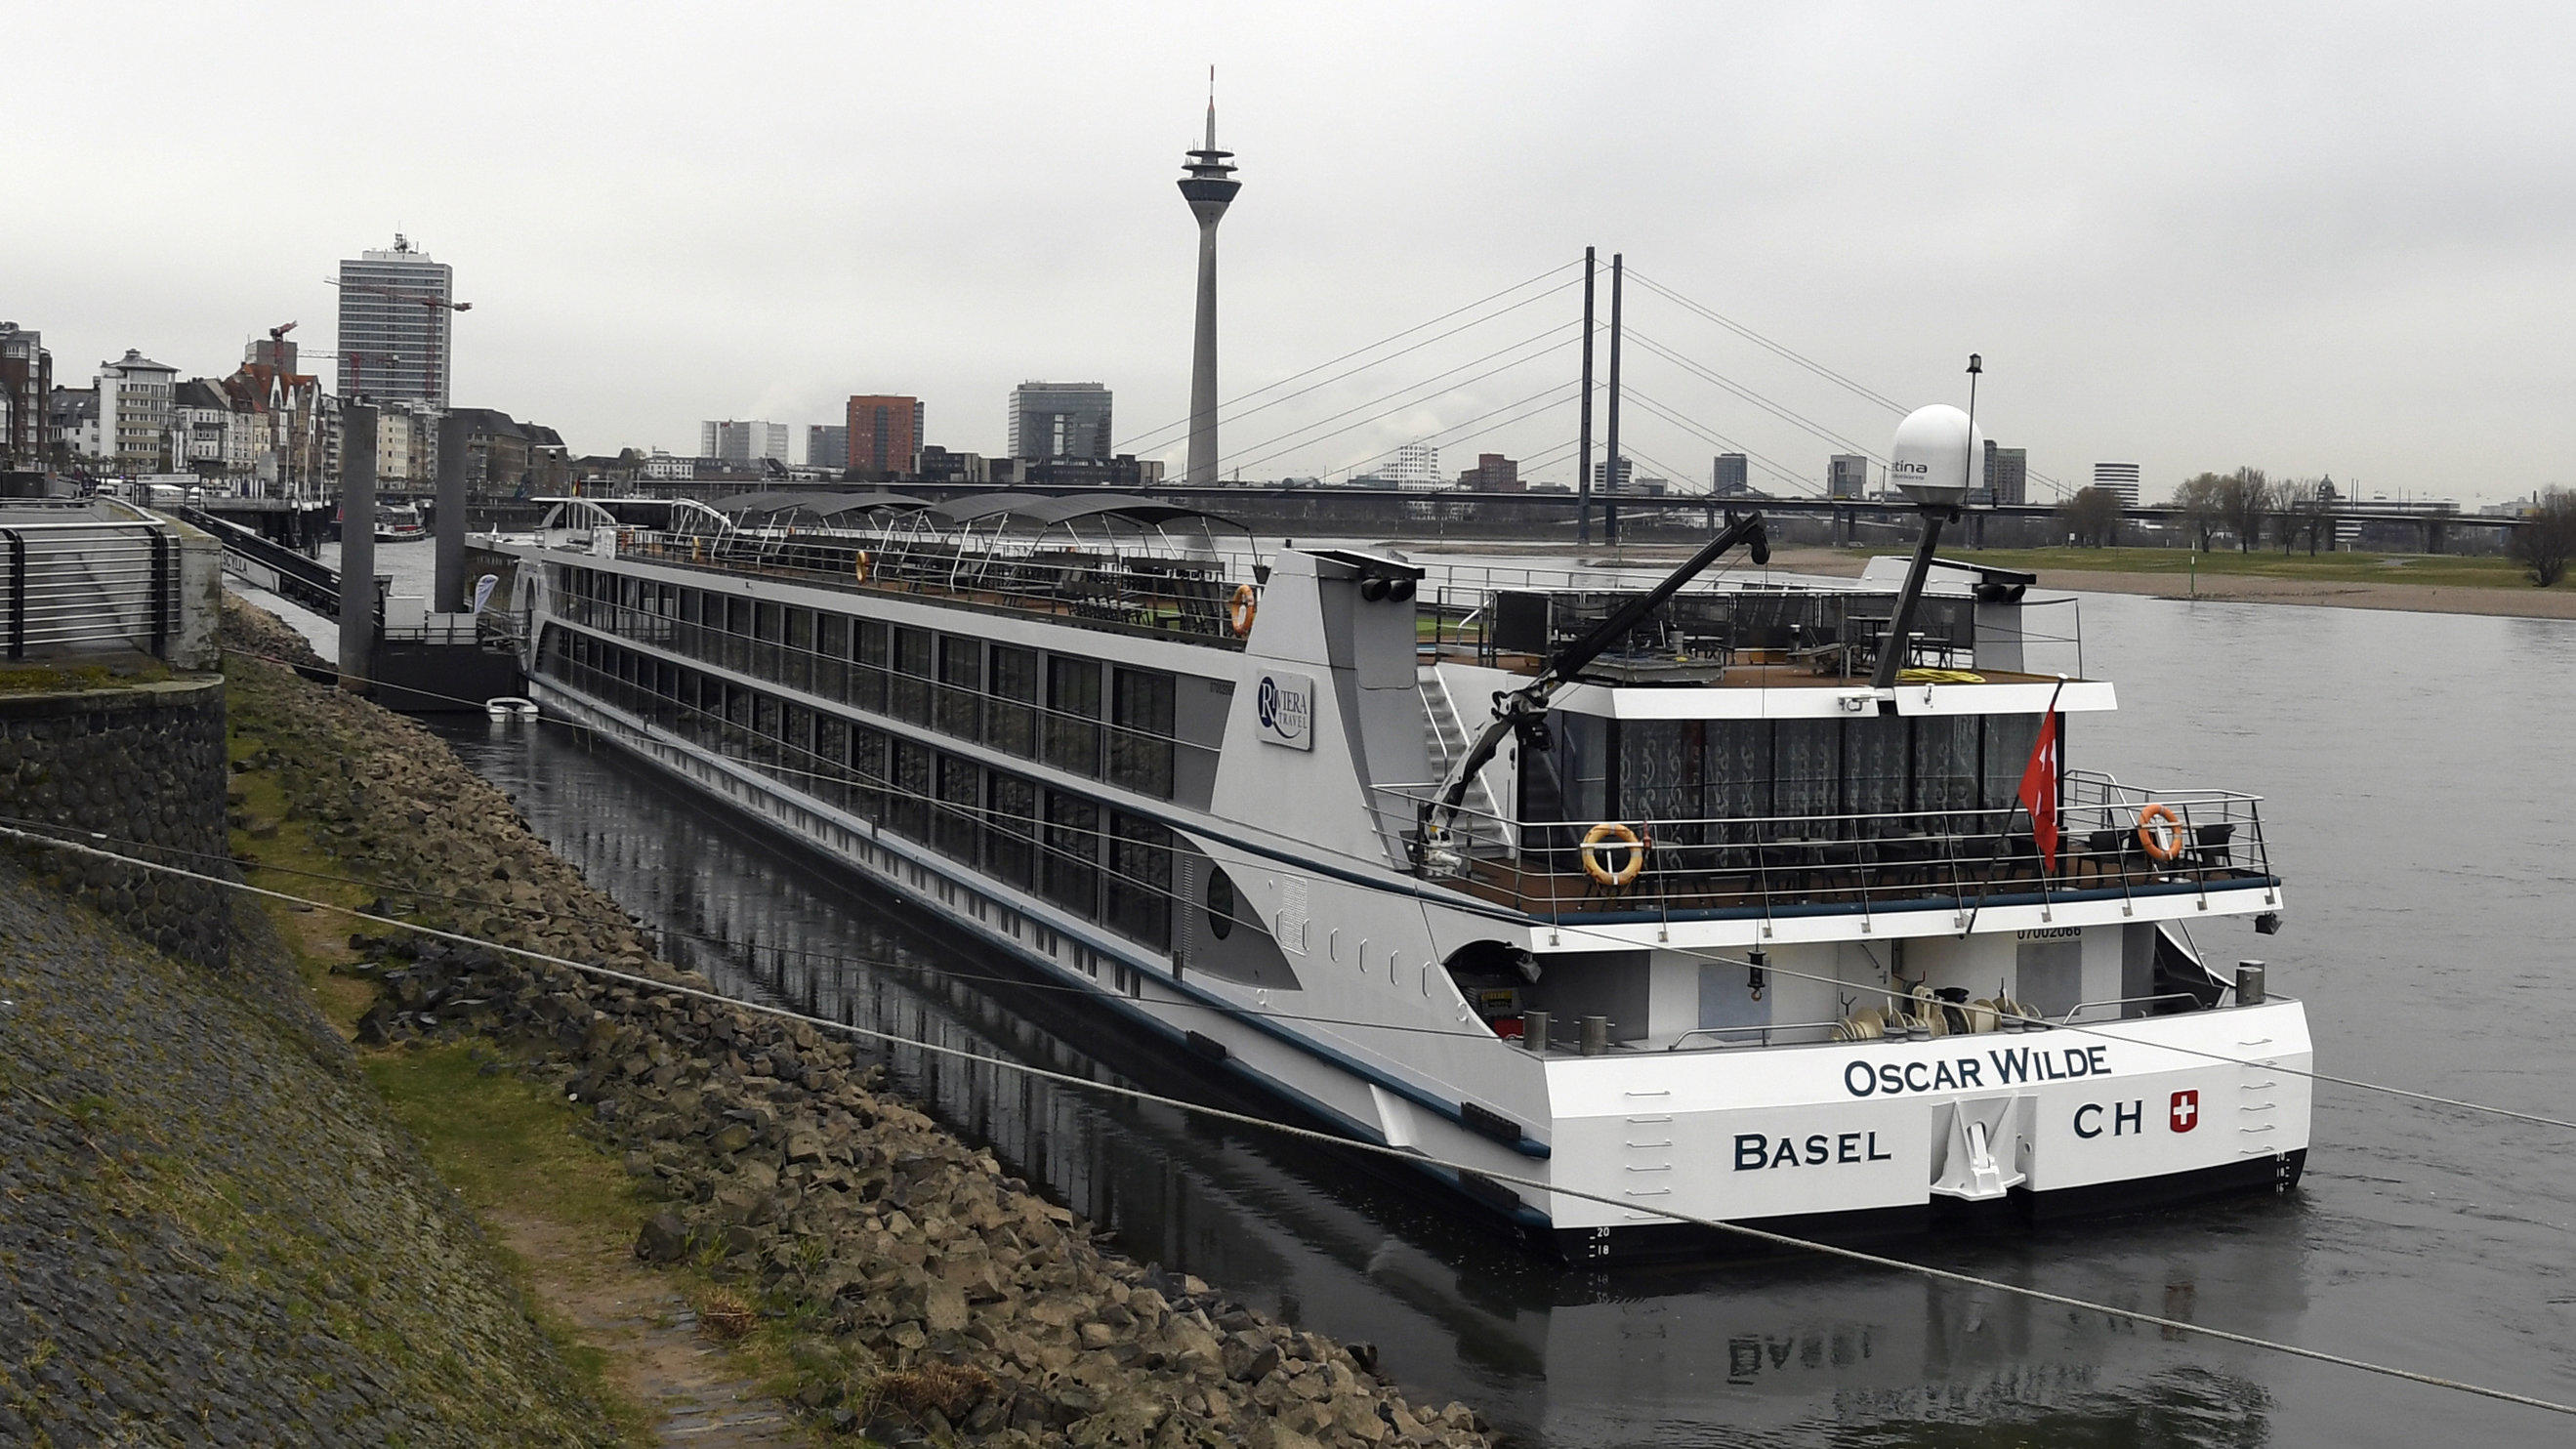 Frau auf Hotelschiff "Oscar Wilde"  in Düsseldorf vergewaltigt